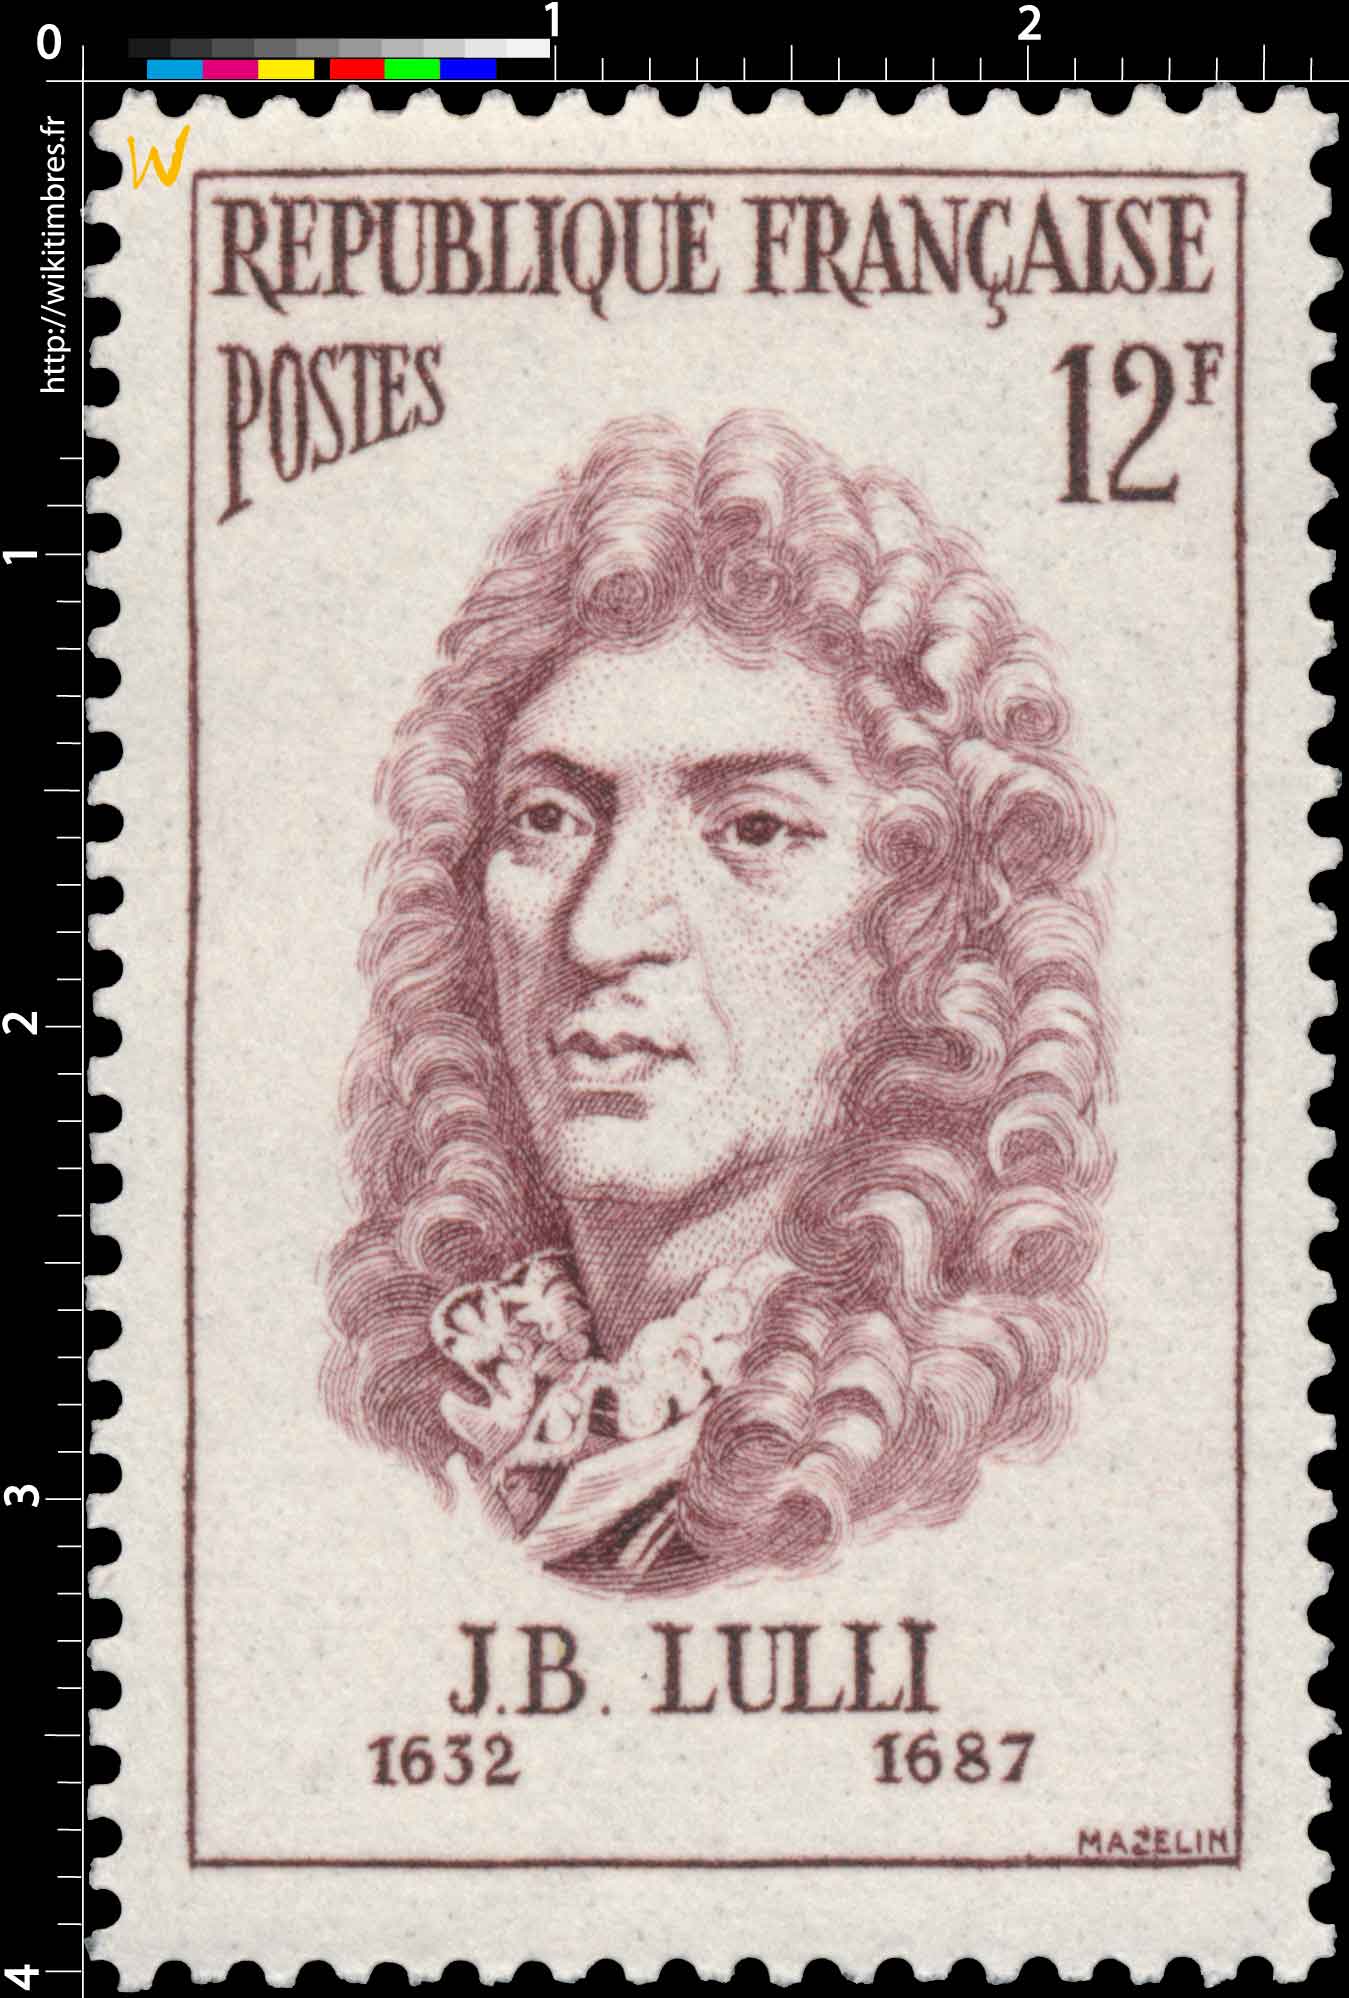 J.B. LULLI 1632-1687